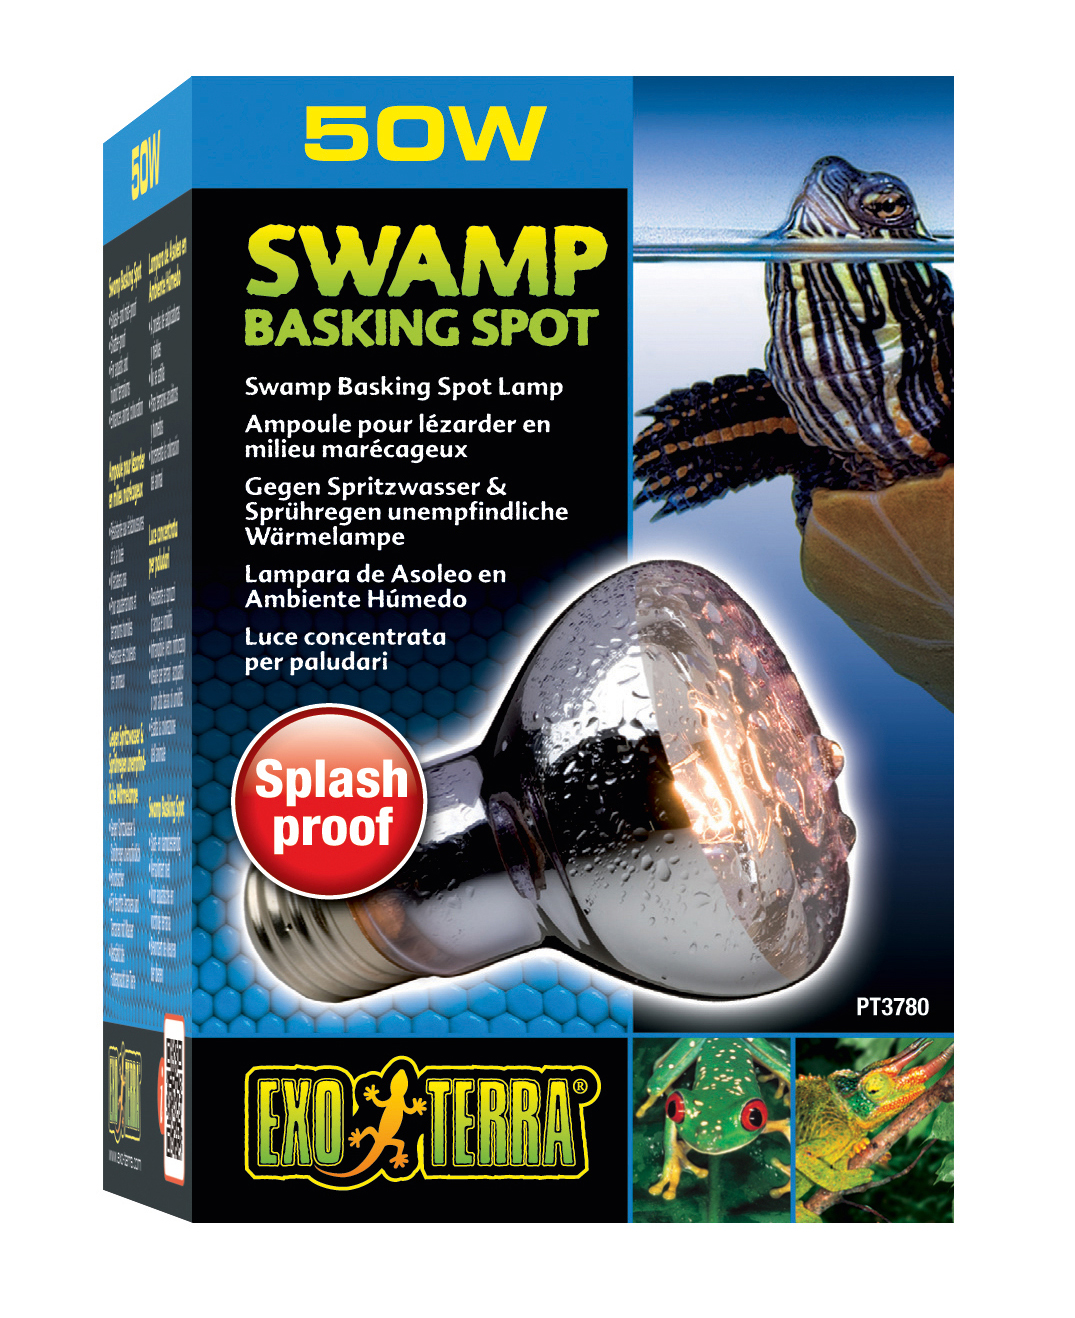 Ex lampe swamp basking spot - <Product shot>